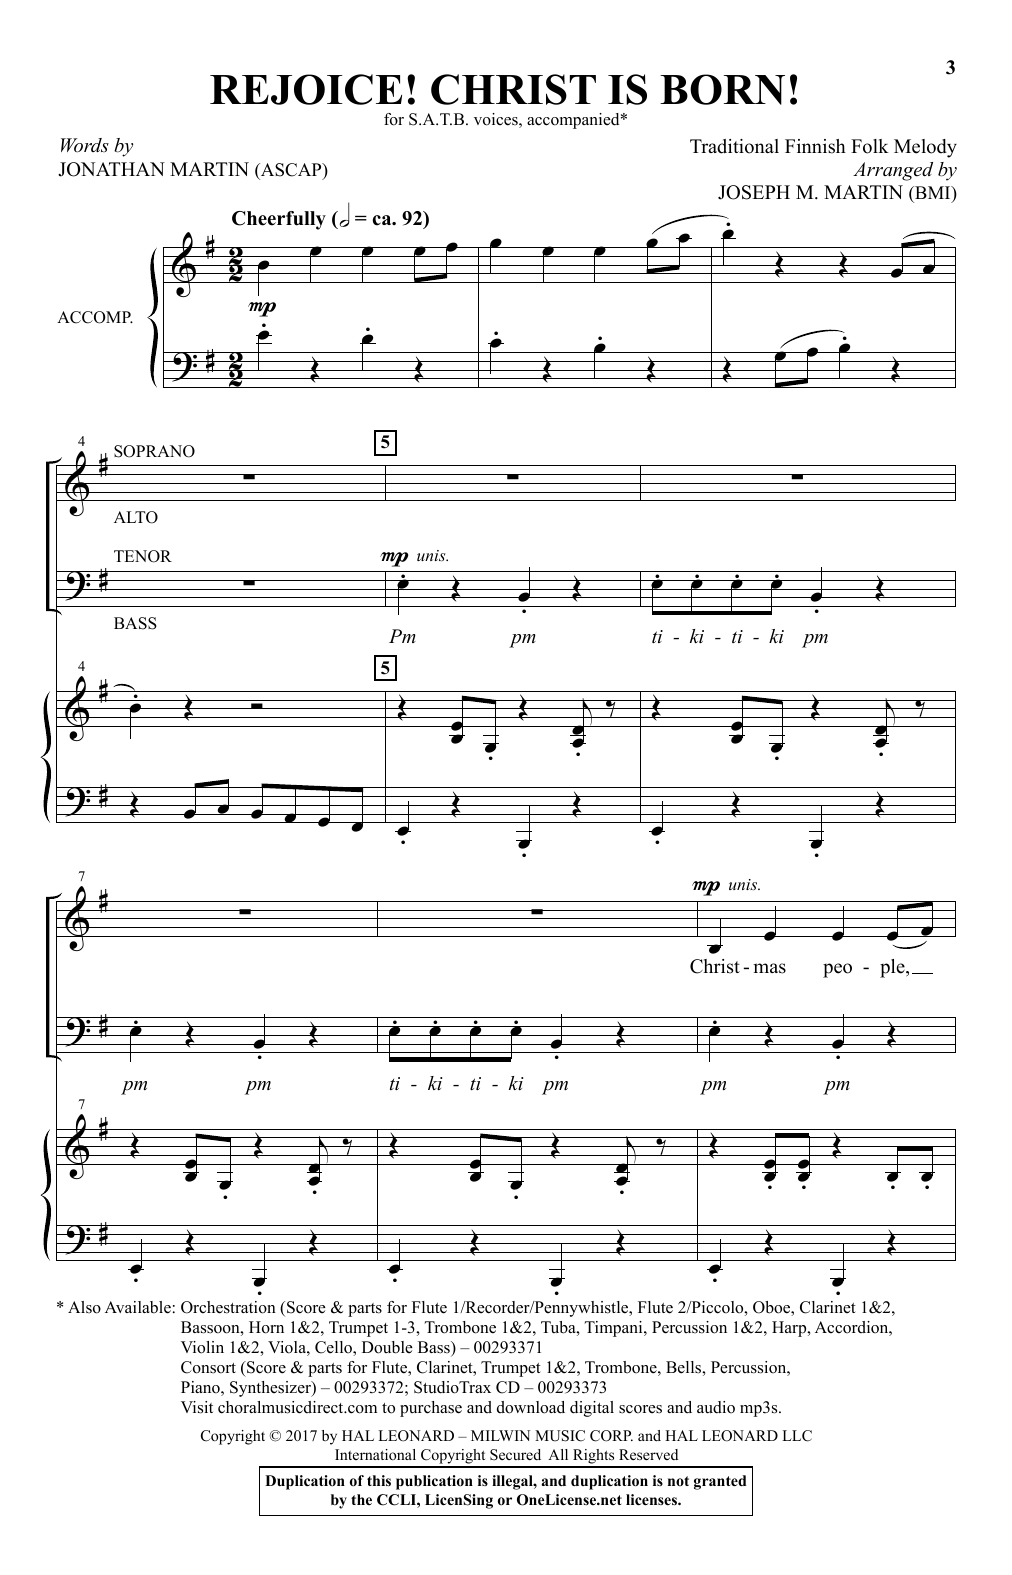 Joseph M. Martin Rejoice! Christ Is Born! Sheet Music Notes & Chords for SATB Choir - Download or Print PDF